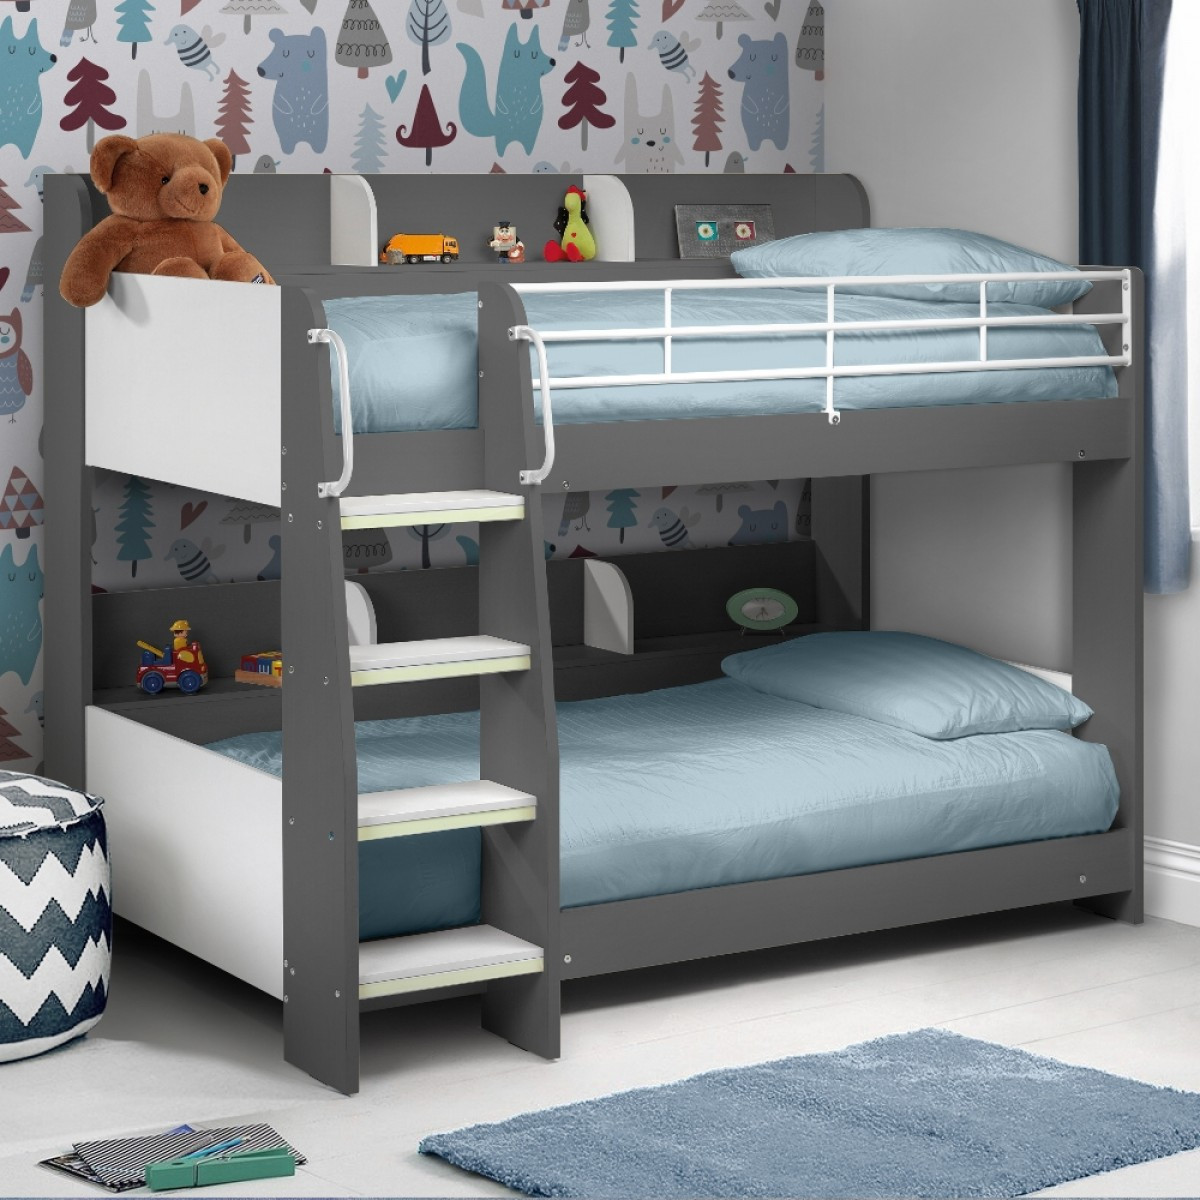 Childrens Bunk Bed With Storage
 Domino Grey Wooden and Metal Kids Storage Bunk Bed